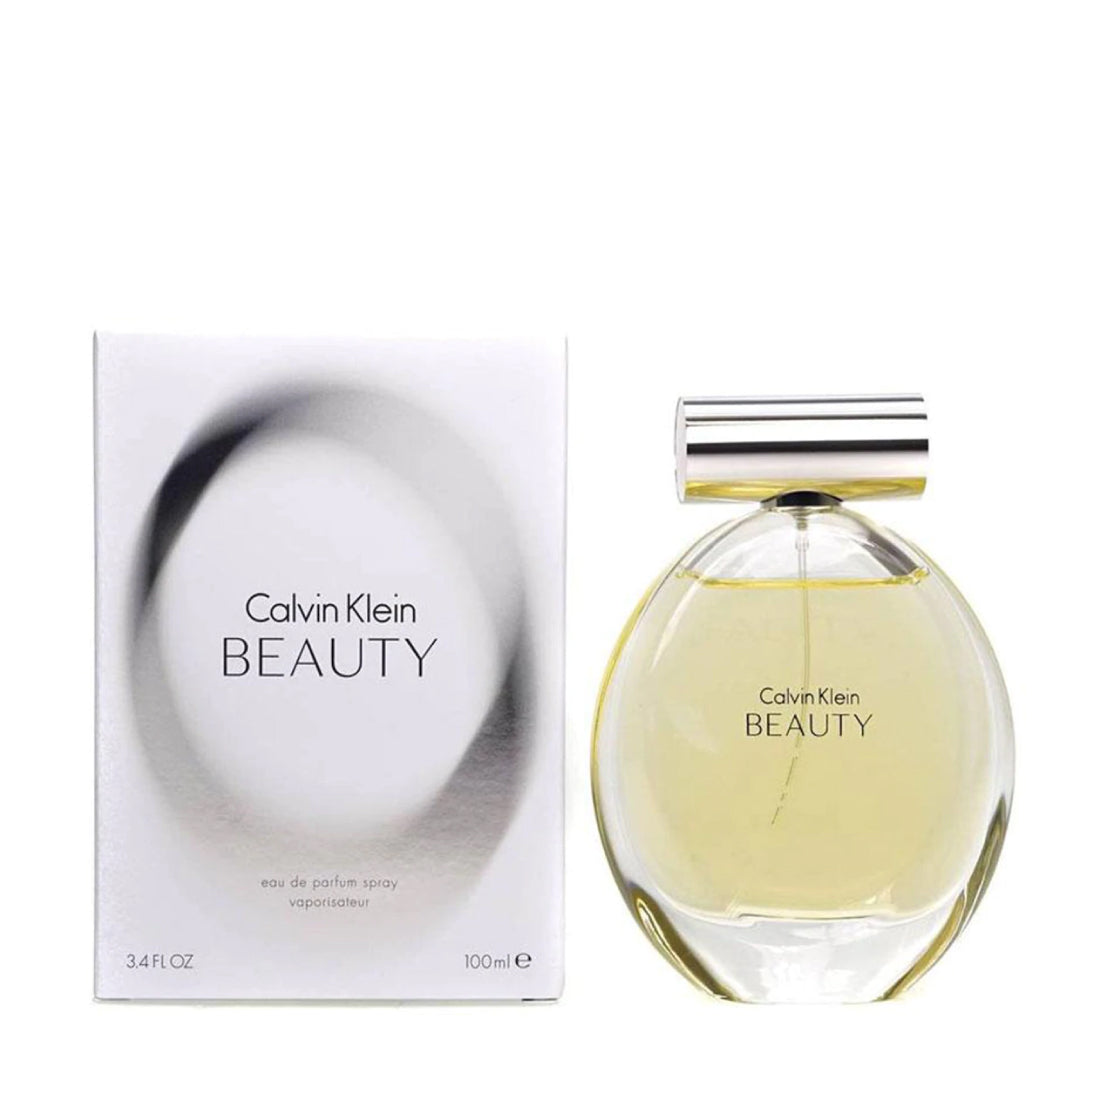 Calvin – NET By ON Women Parfum De Beauty Klein For oz 3.4 Eau Spray PERFUME